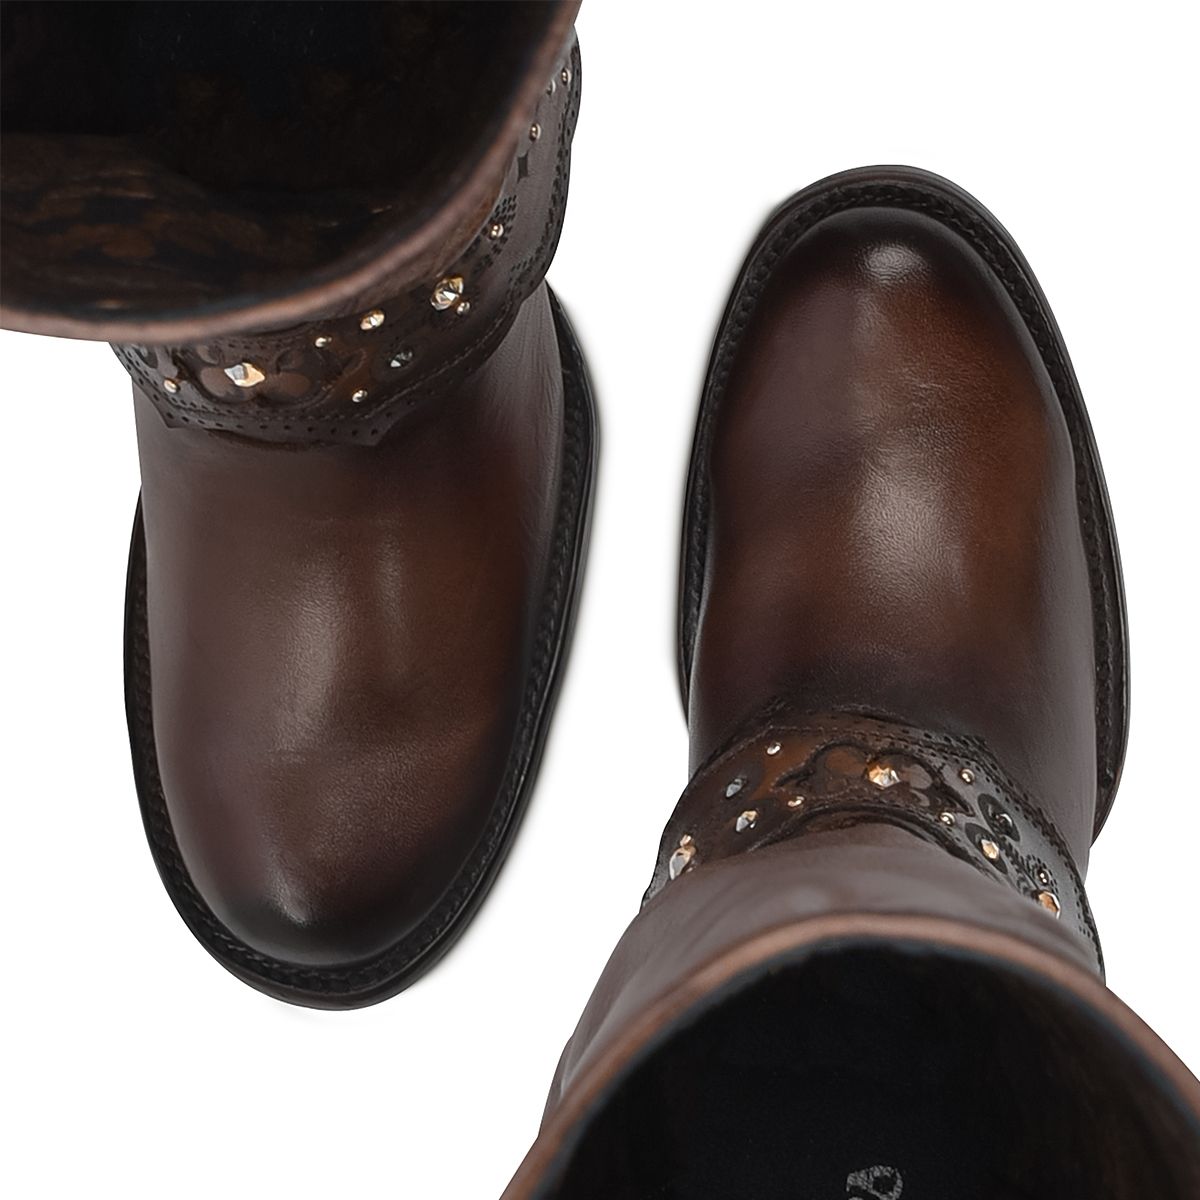 1Z41RS - Cuadra mocha casual fashion cowboy leather boots for women-CUADRA-Kuet-Cuadra-Boots